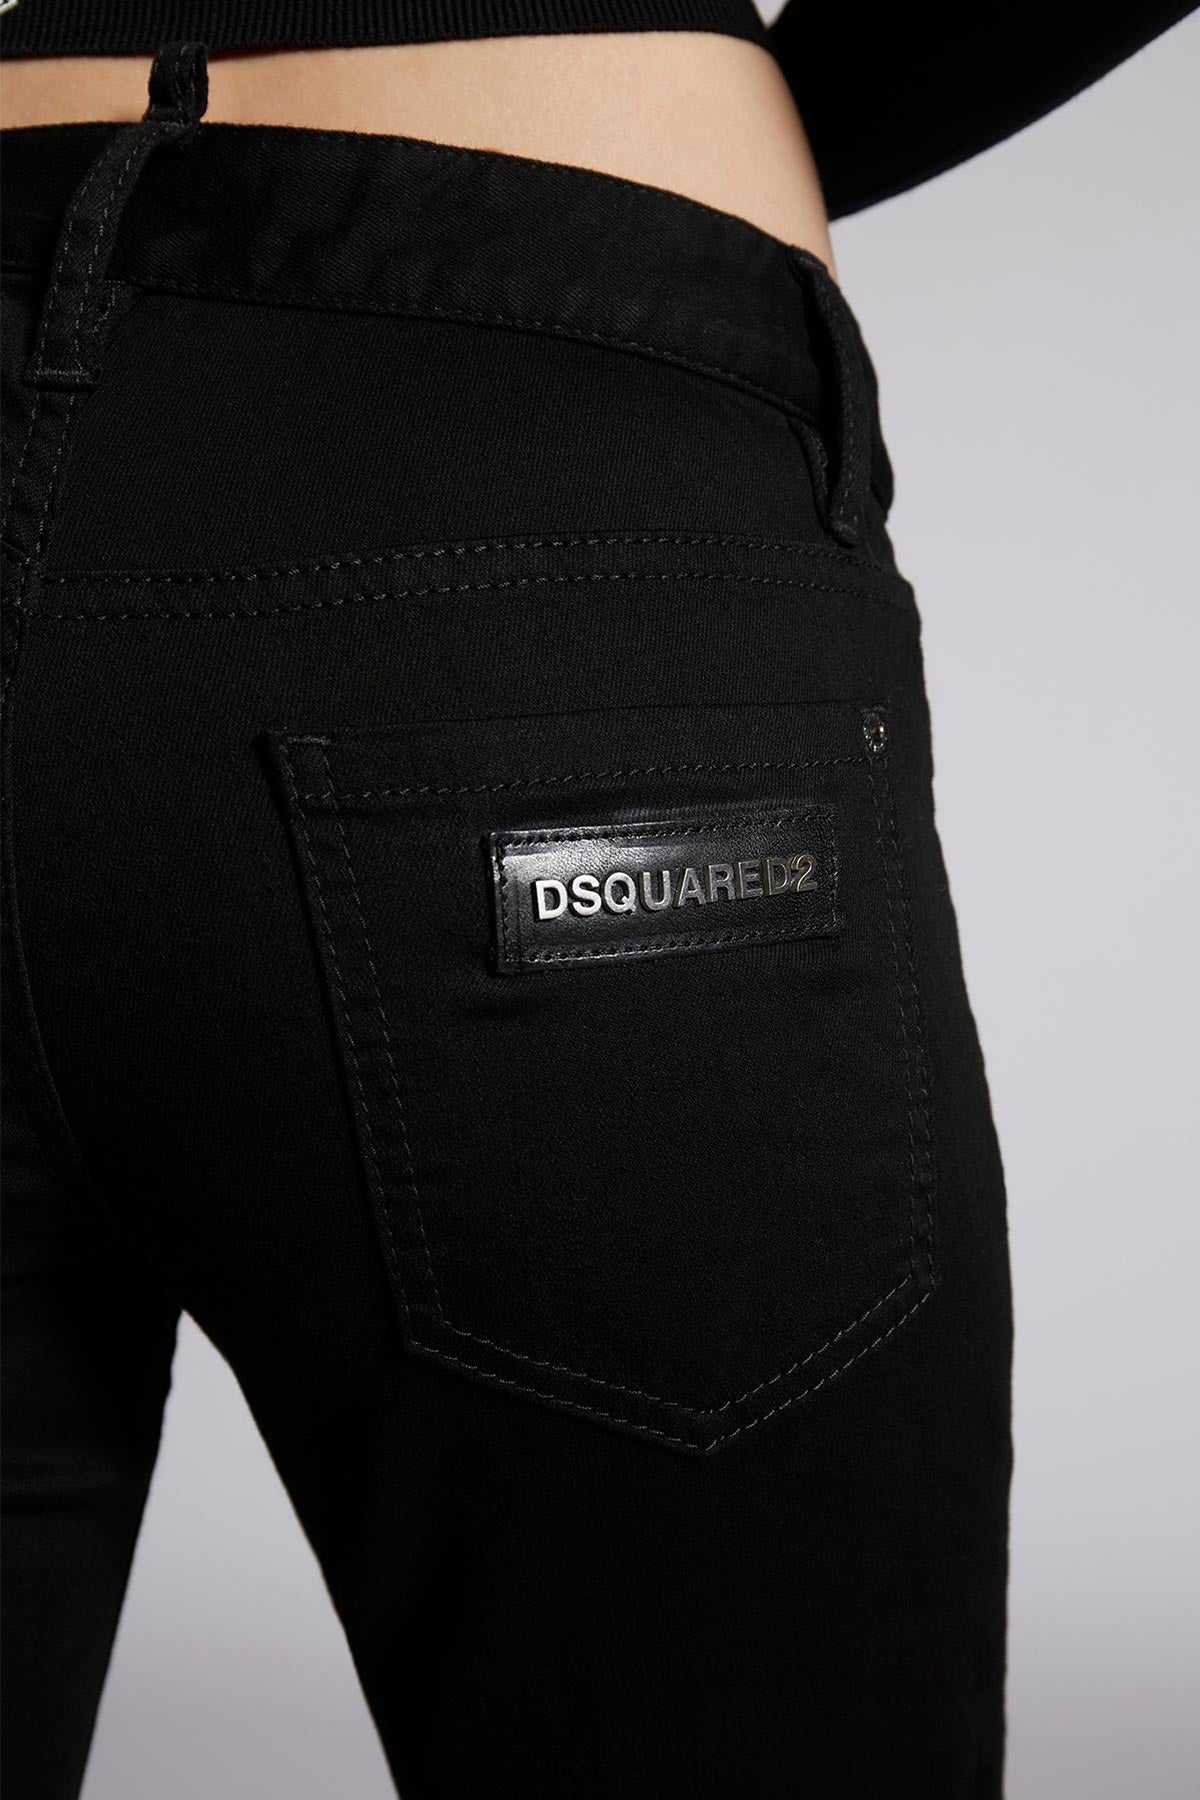 Dsquared Cool Girl Streç Crop Jeans-Libas Trendy Fashion Store